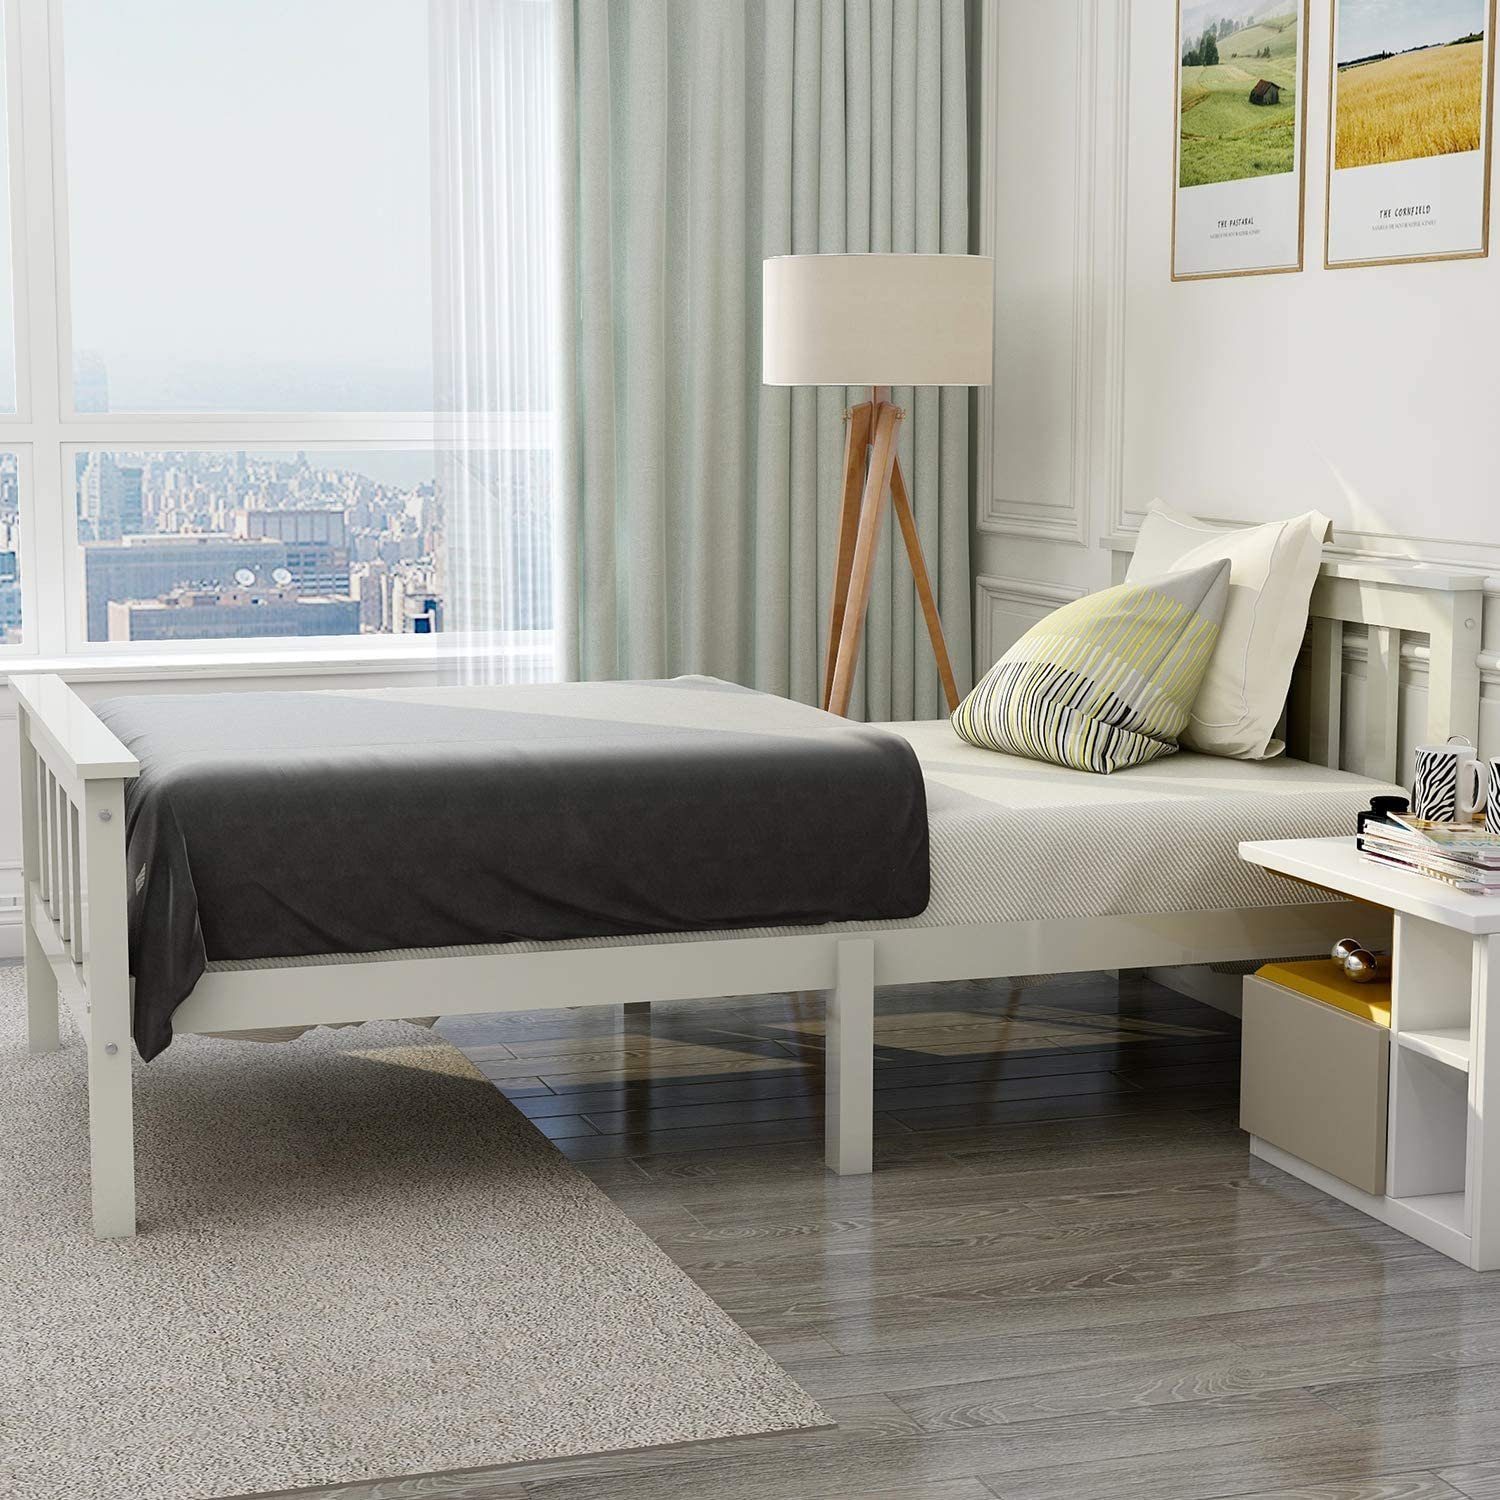 Merax Einzelbett mit Lattenrost,Jugendbett mit aus Kopfteil, 90x200cm Holzbett Massivholz, Bettgestell